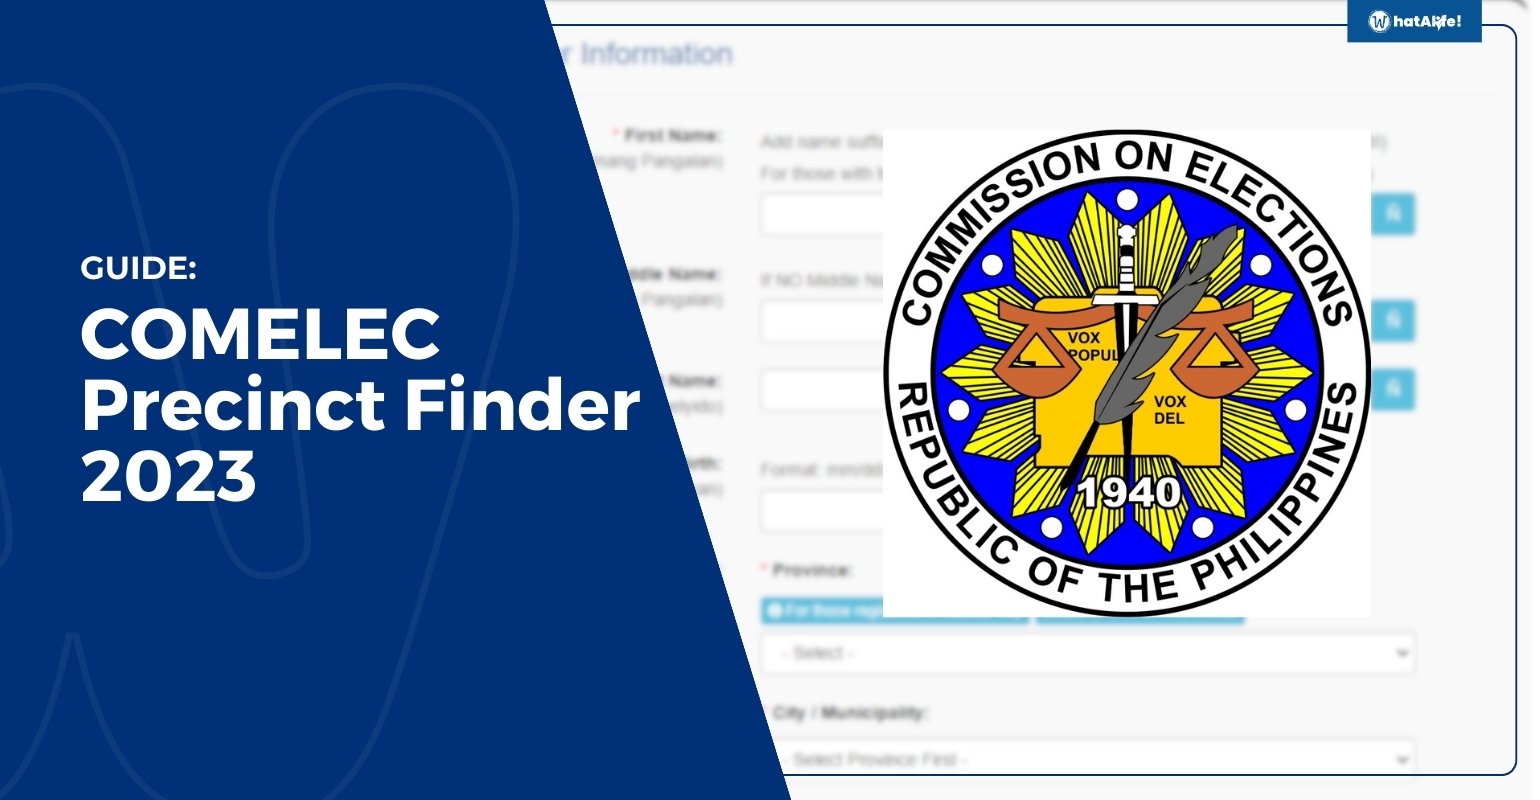 GUIDE: COMELEC Precinct Finder 2023